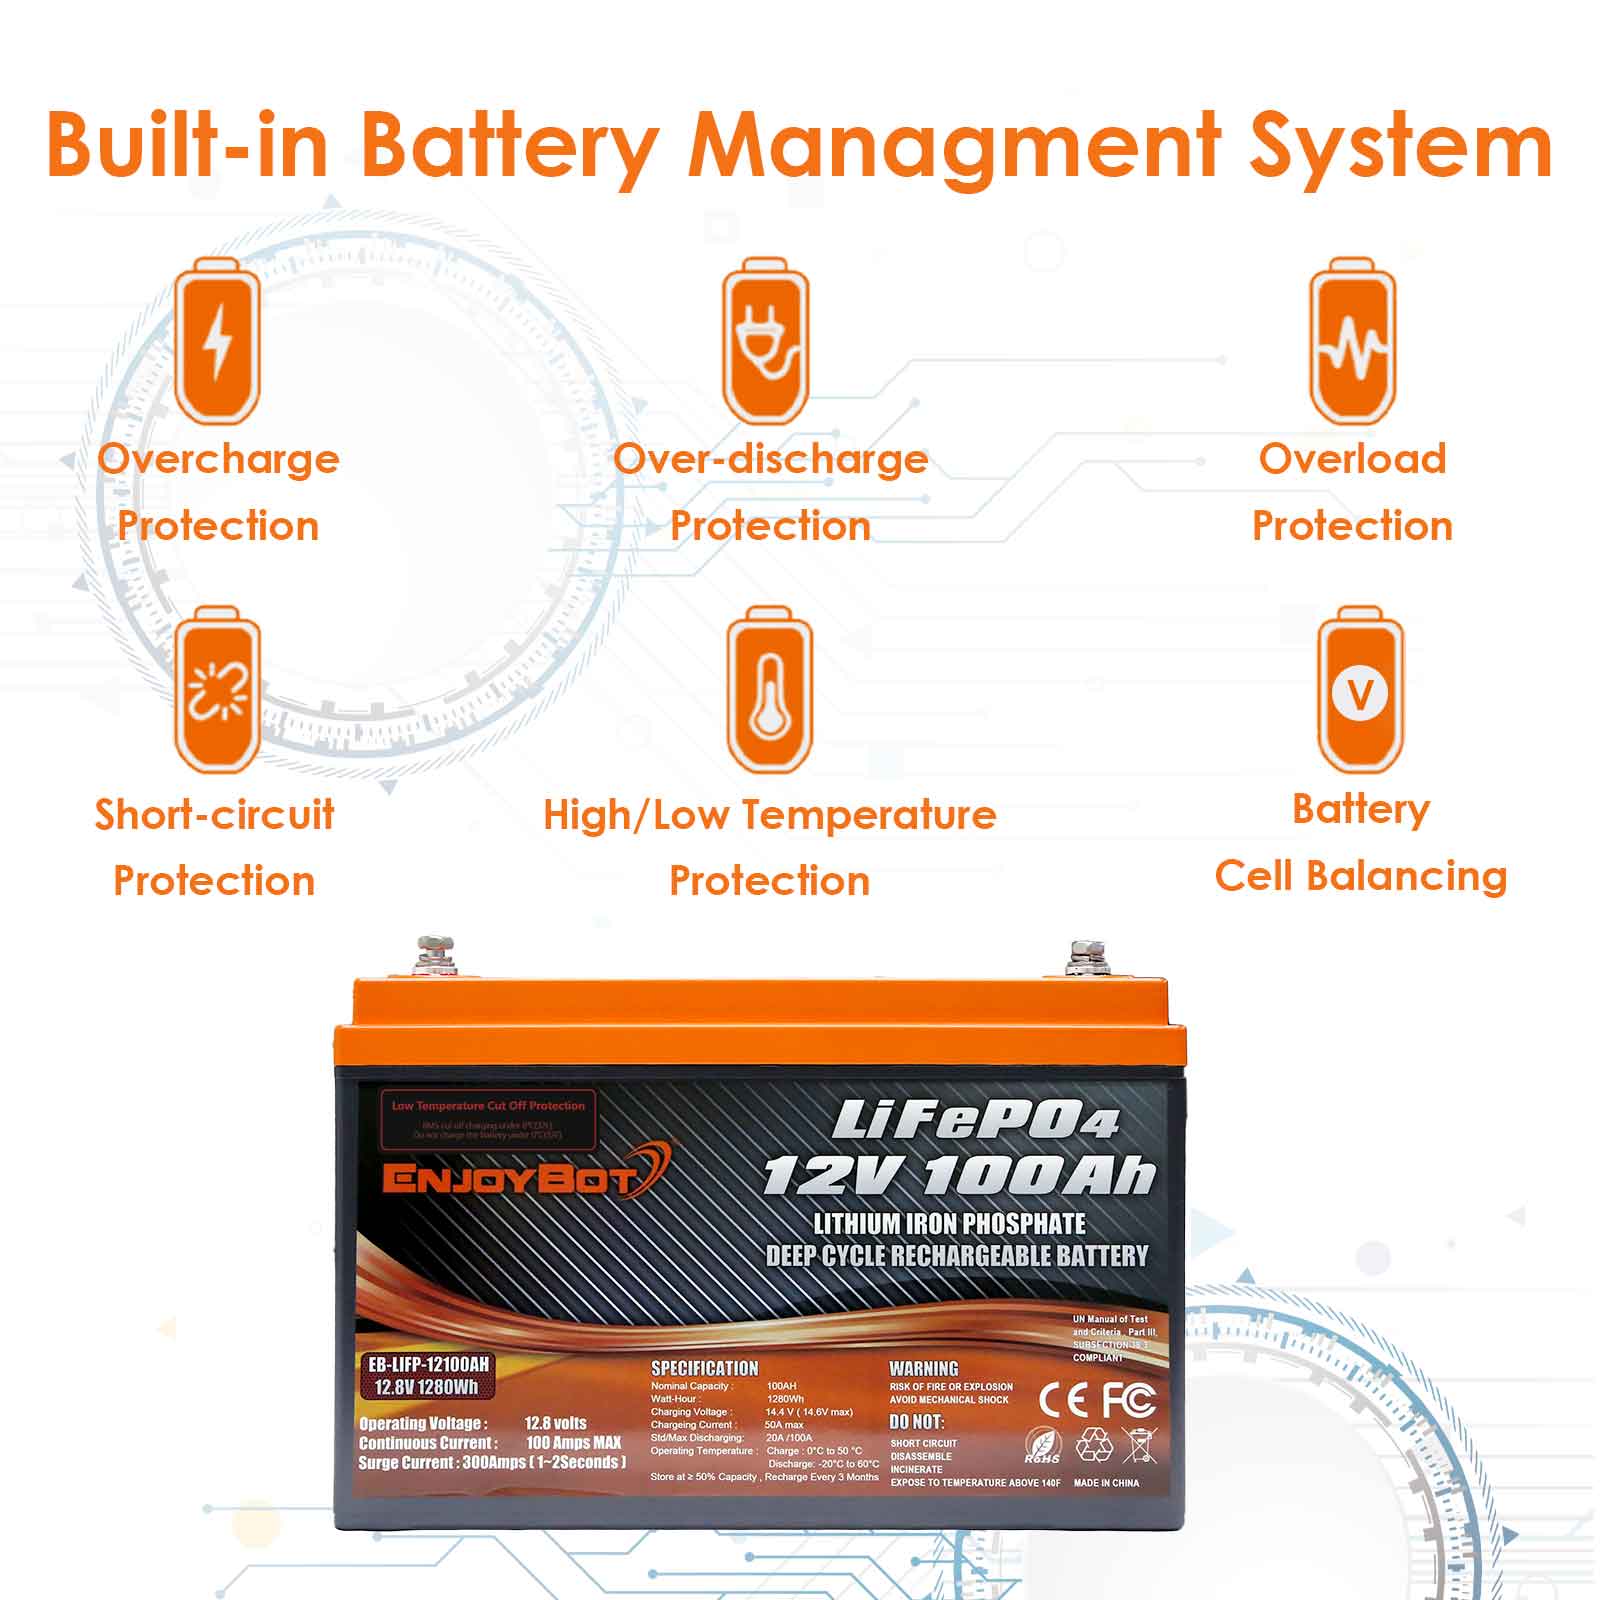 Enjoybot LiFePO4 Golf Cart Battery 36v 100ah Lithium Battery 3840 Wh - 3 batteries